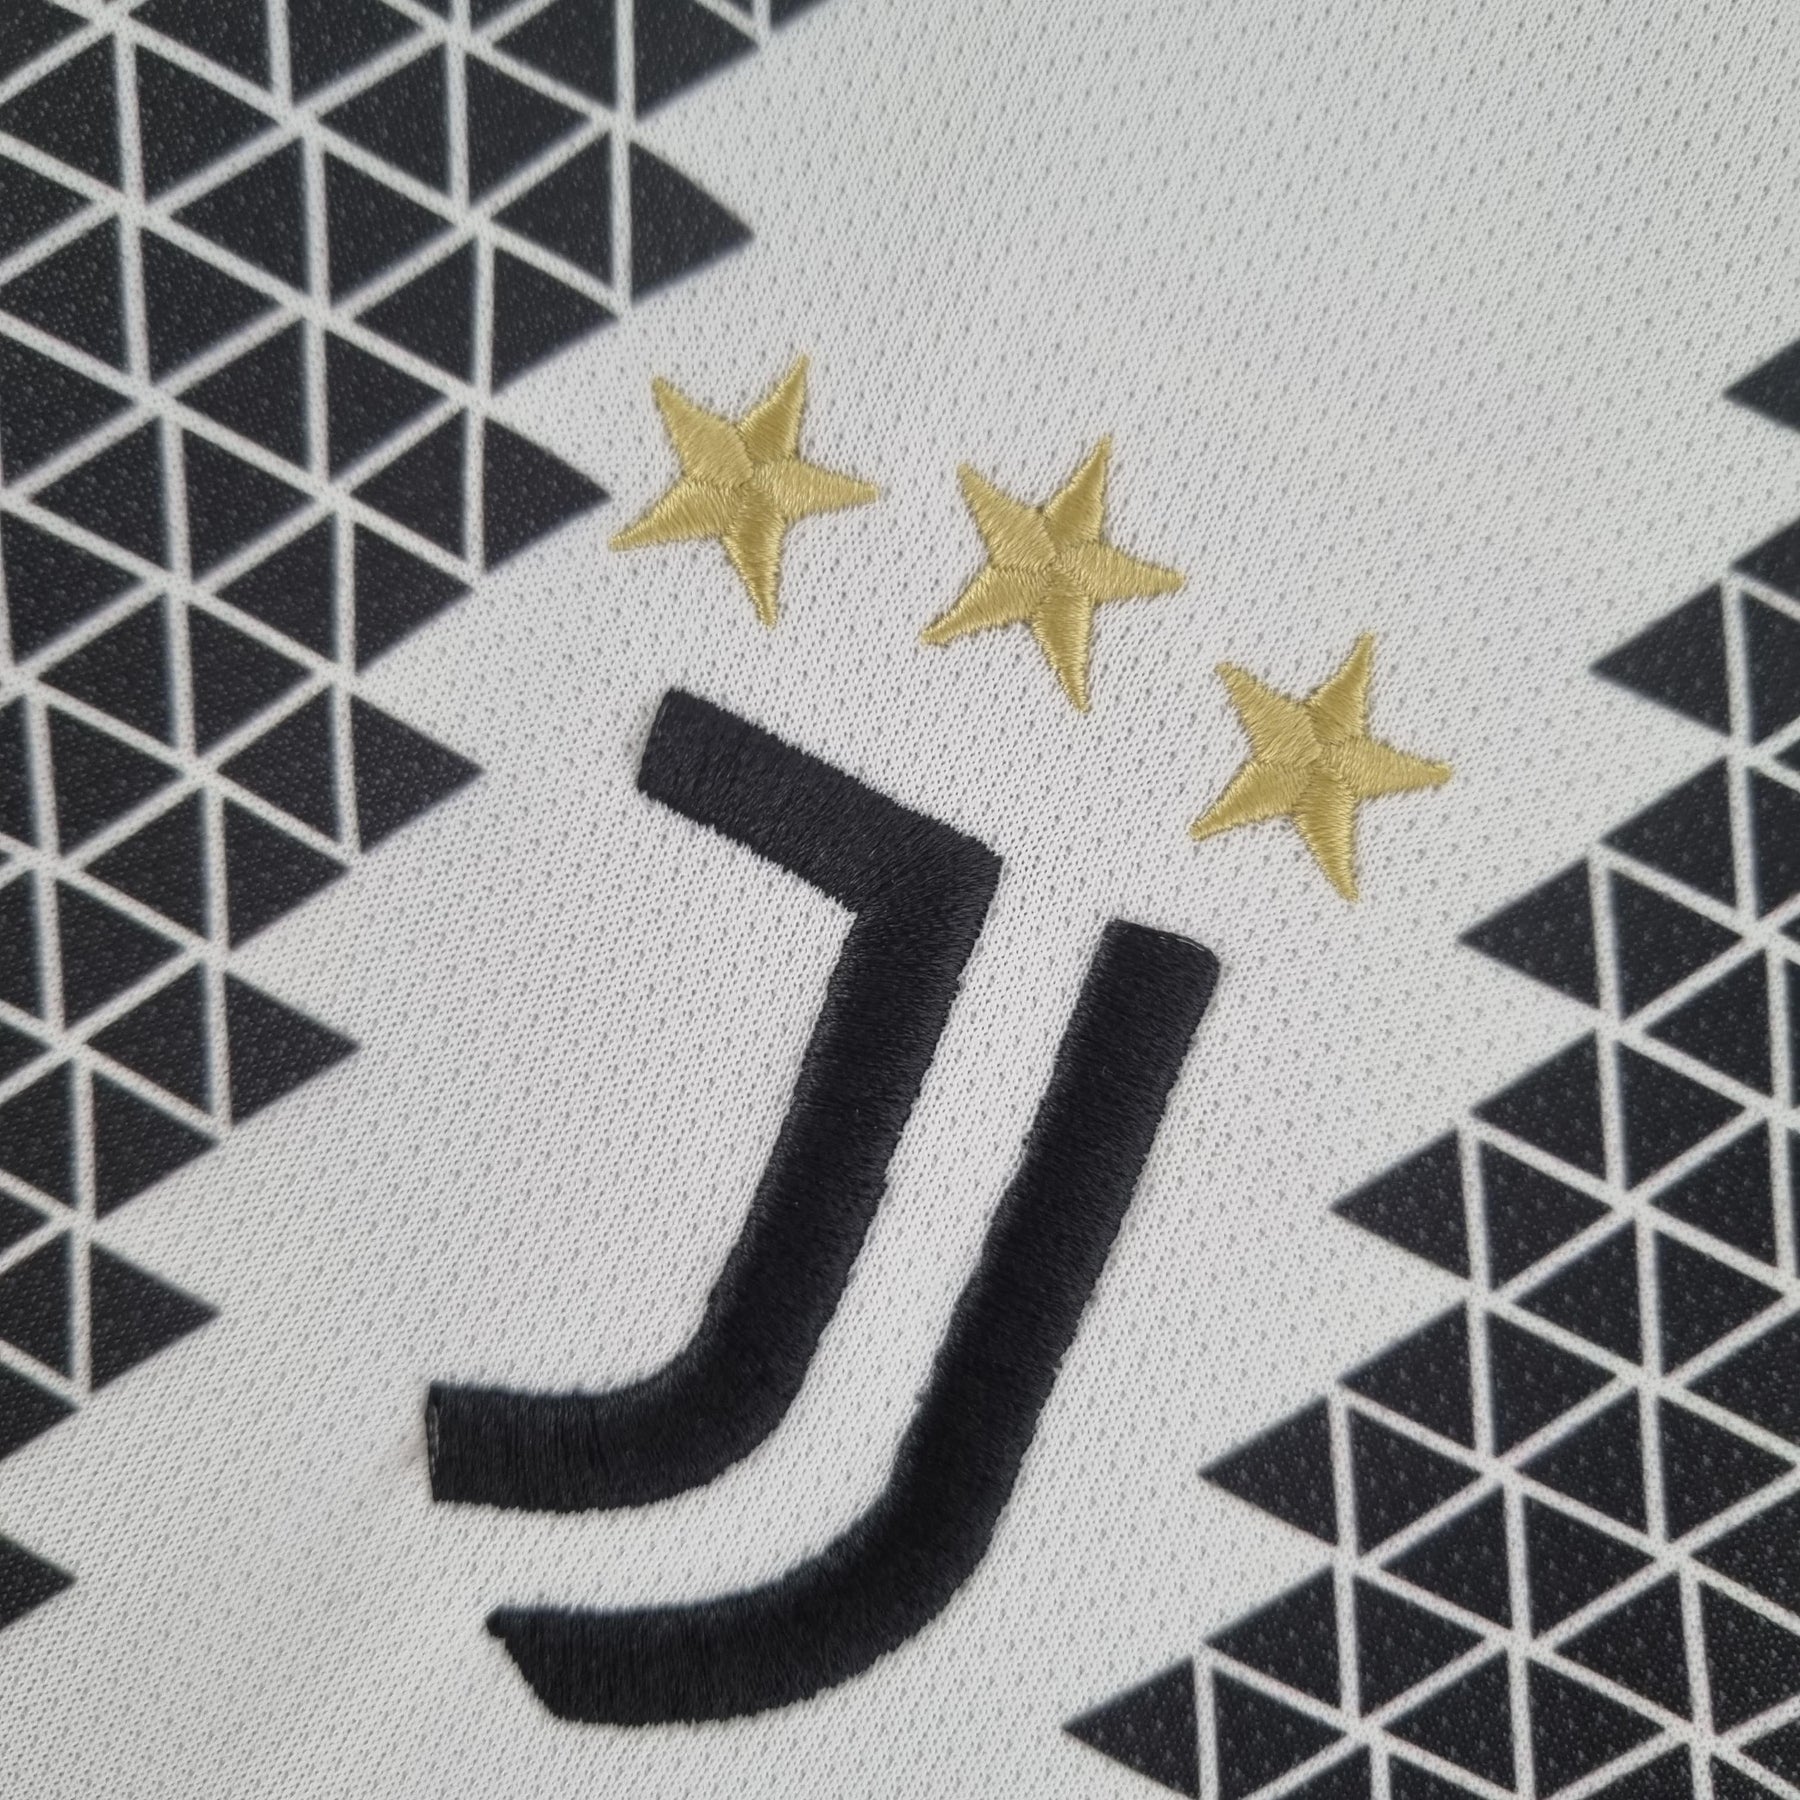 Camisa Juventus l 2022/23 Branca - Modelo Torcedor